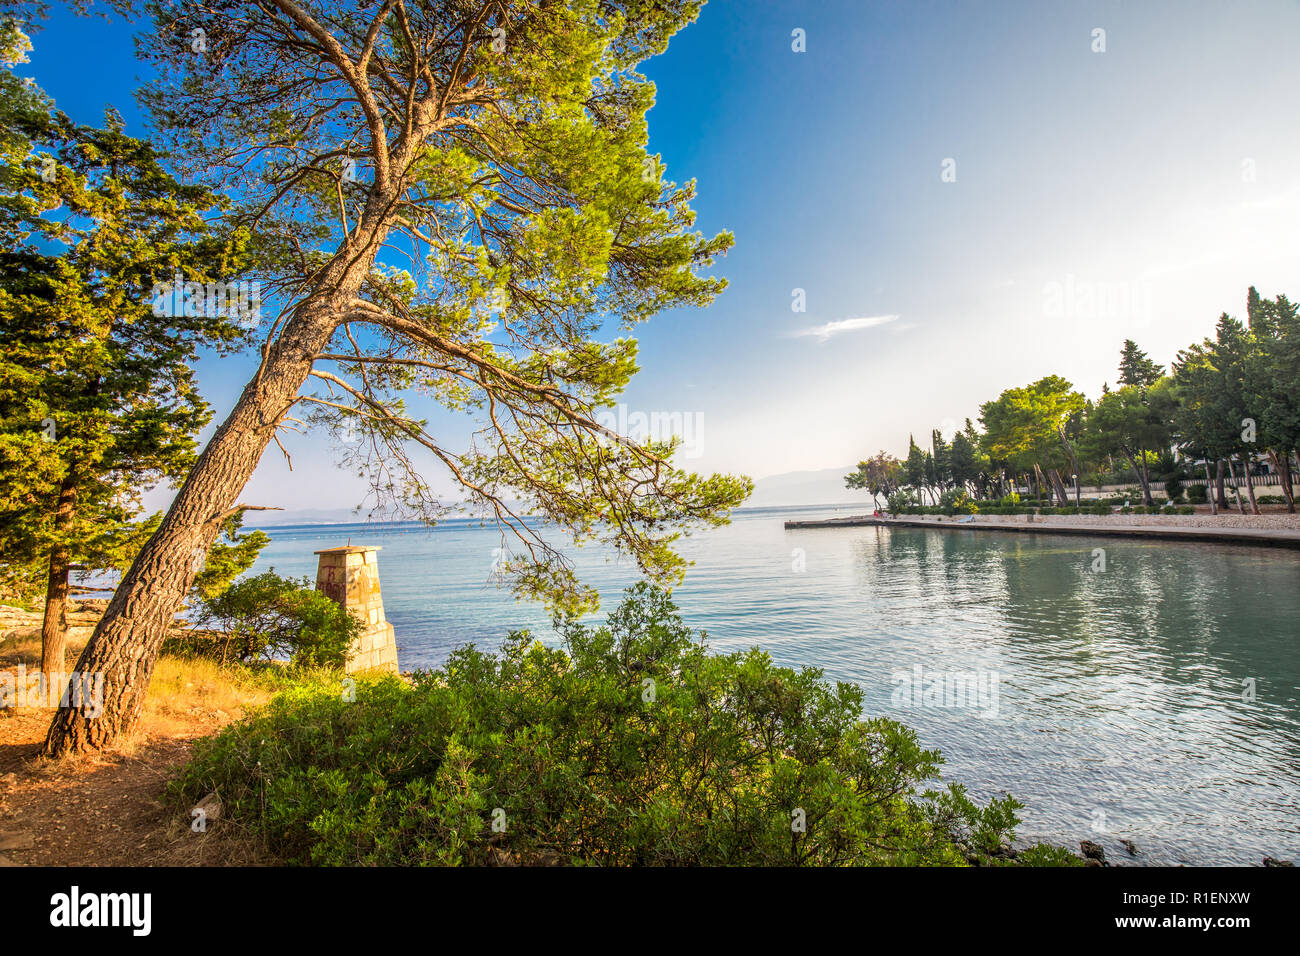 Pebble beach on Brac island with turquoise clear ocean water, Supetar, Brac, Croatia. Stock Photo